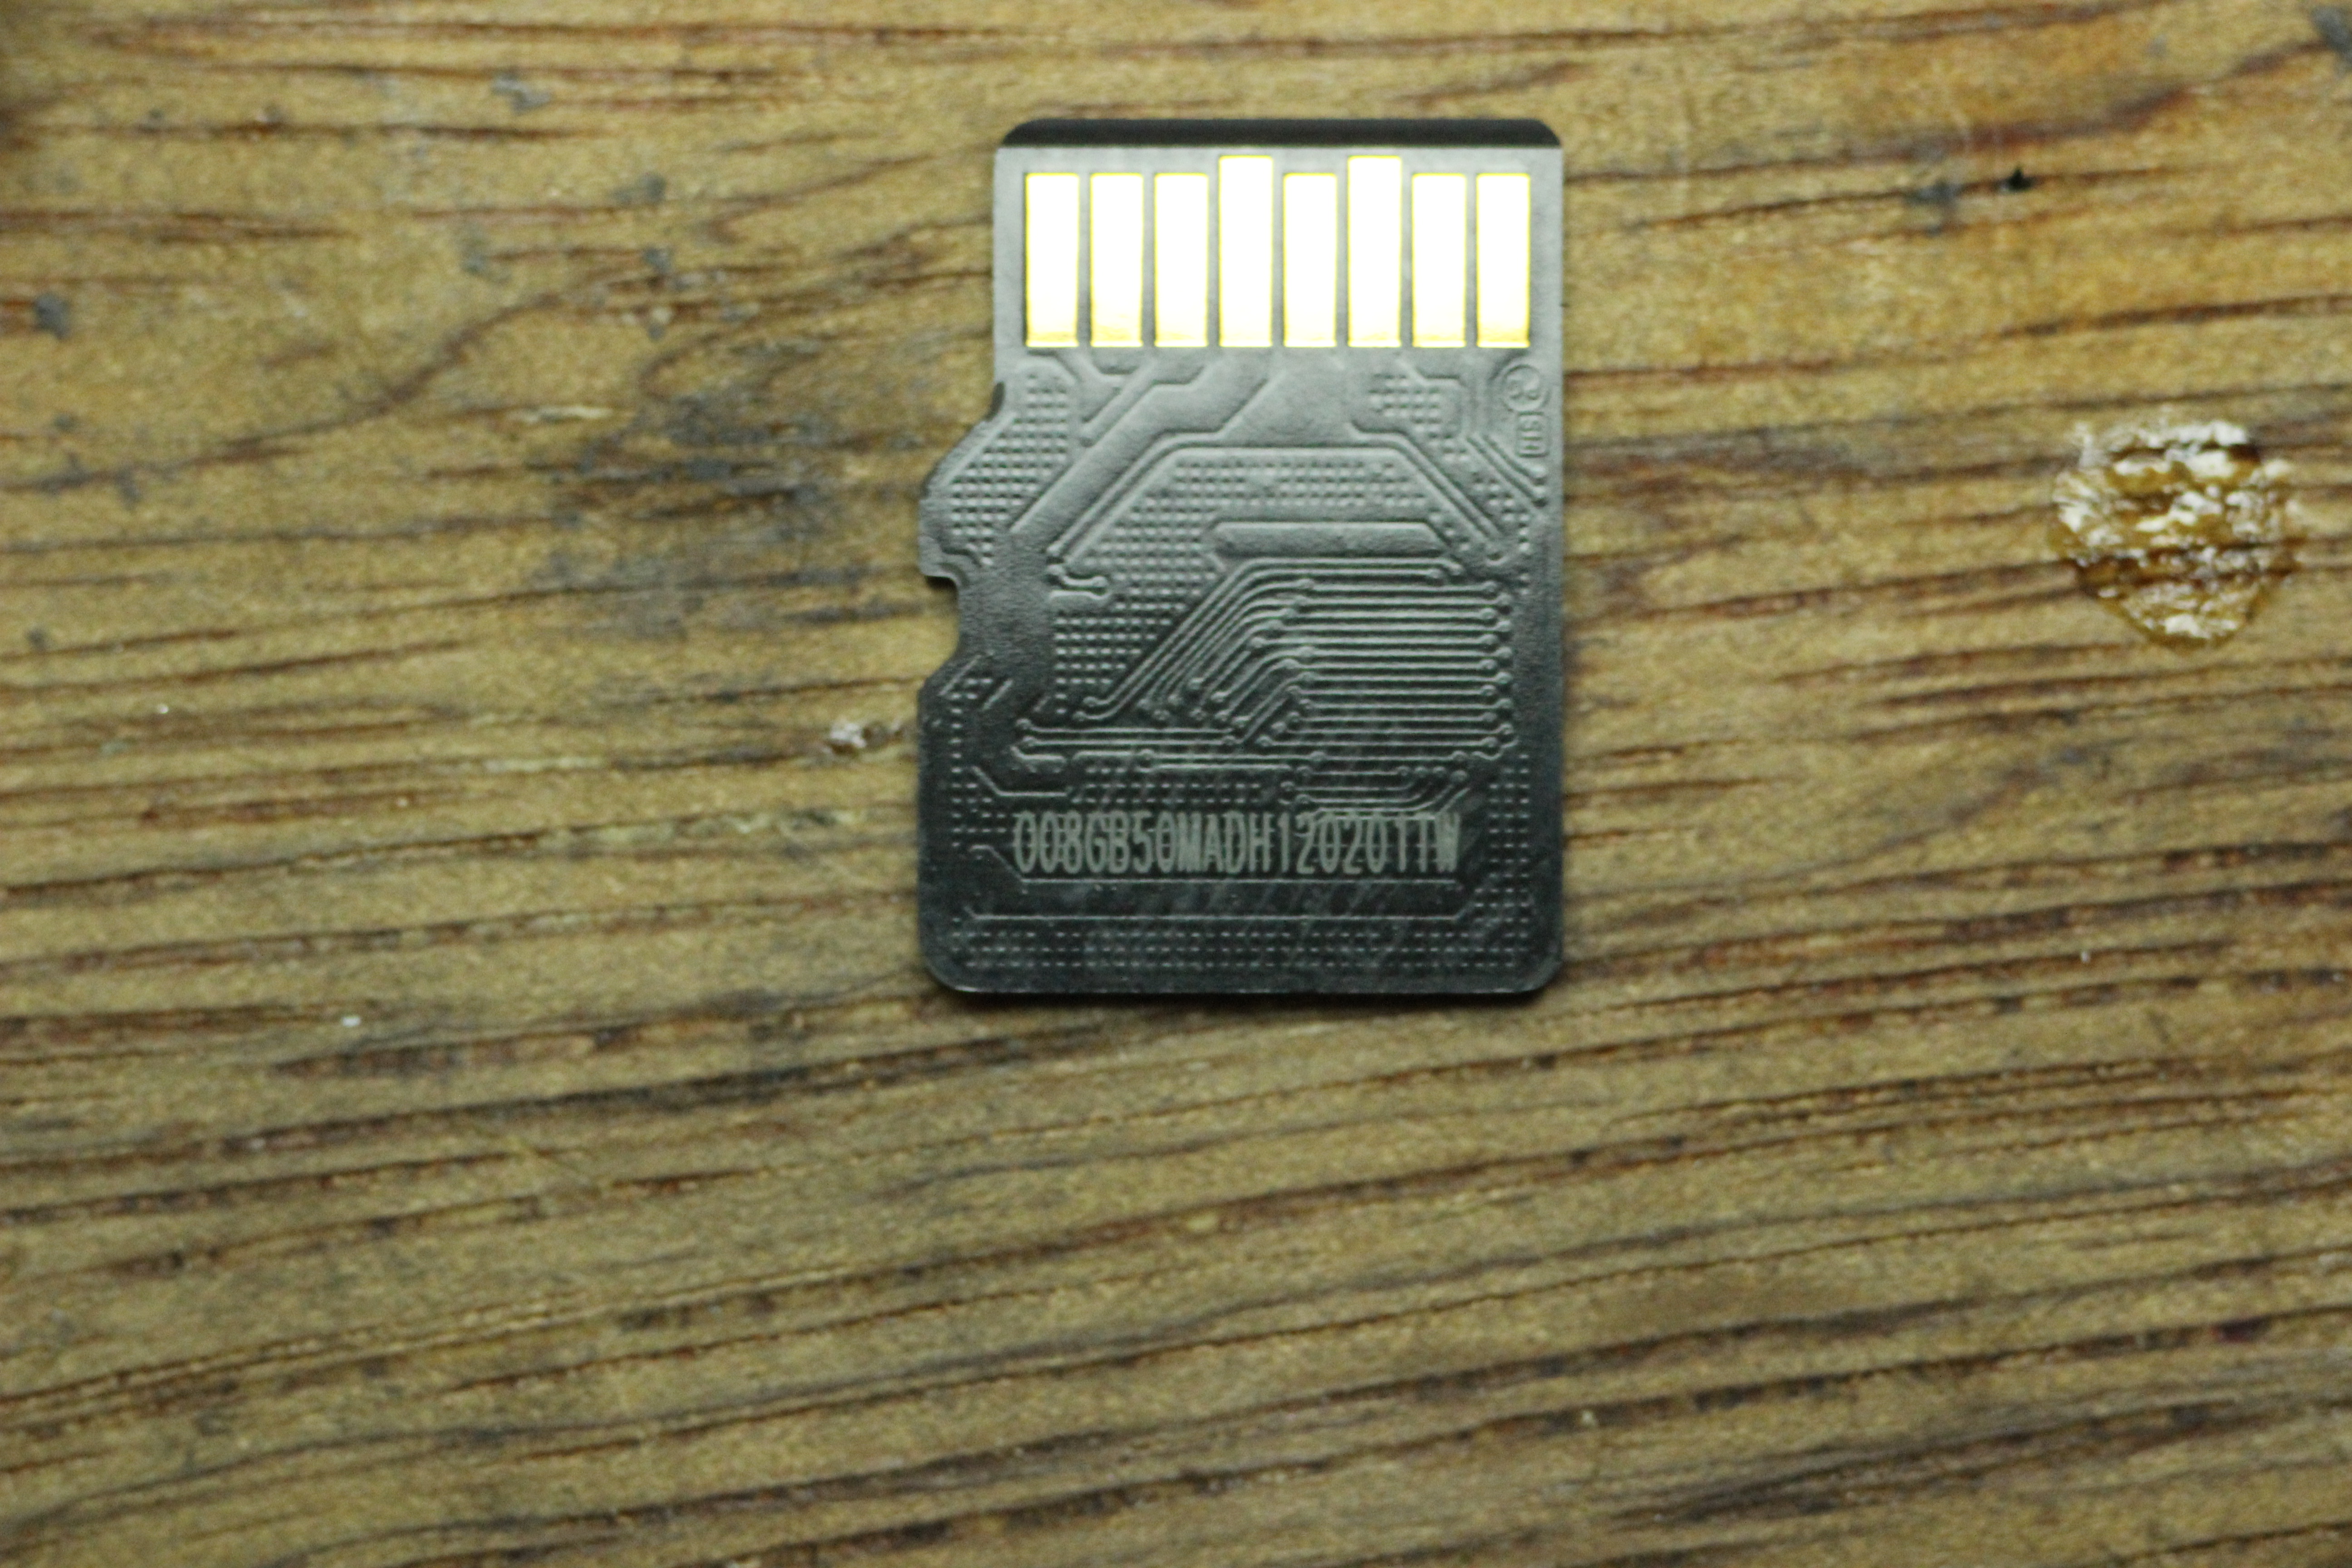 008GB50MADH120201TW microSD  data recovery